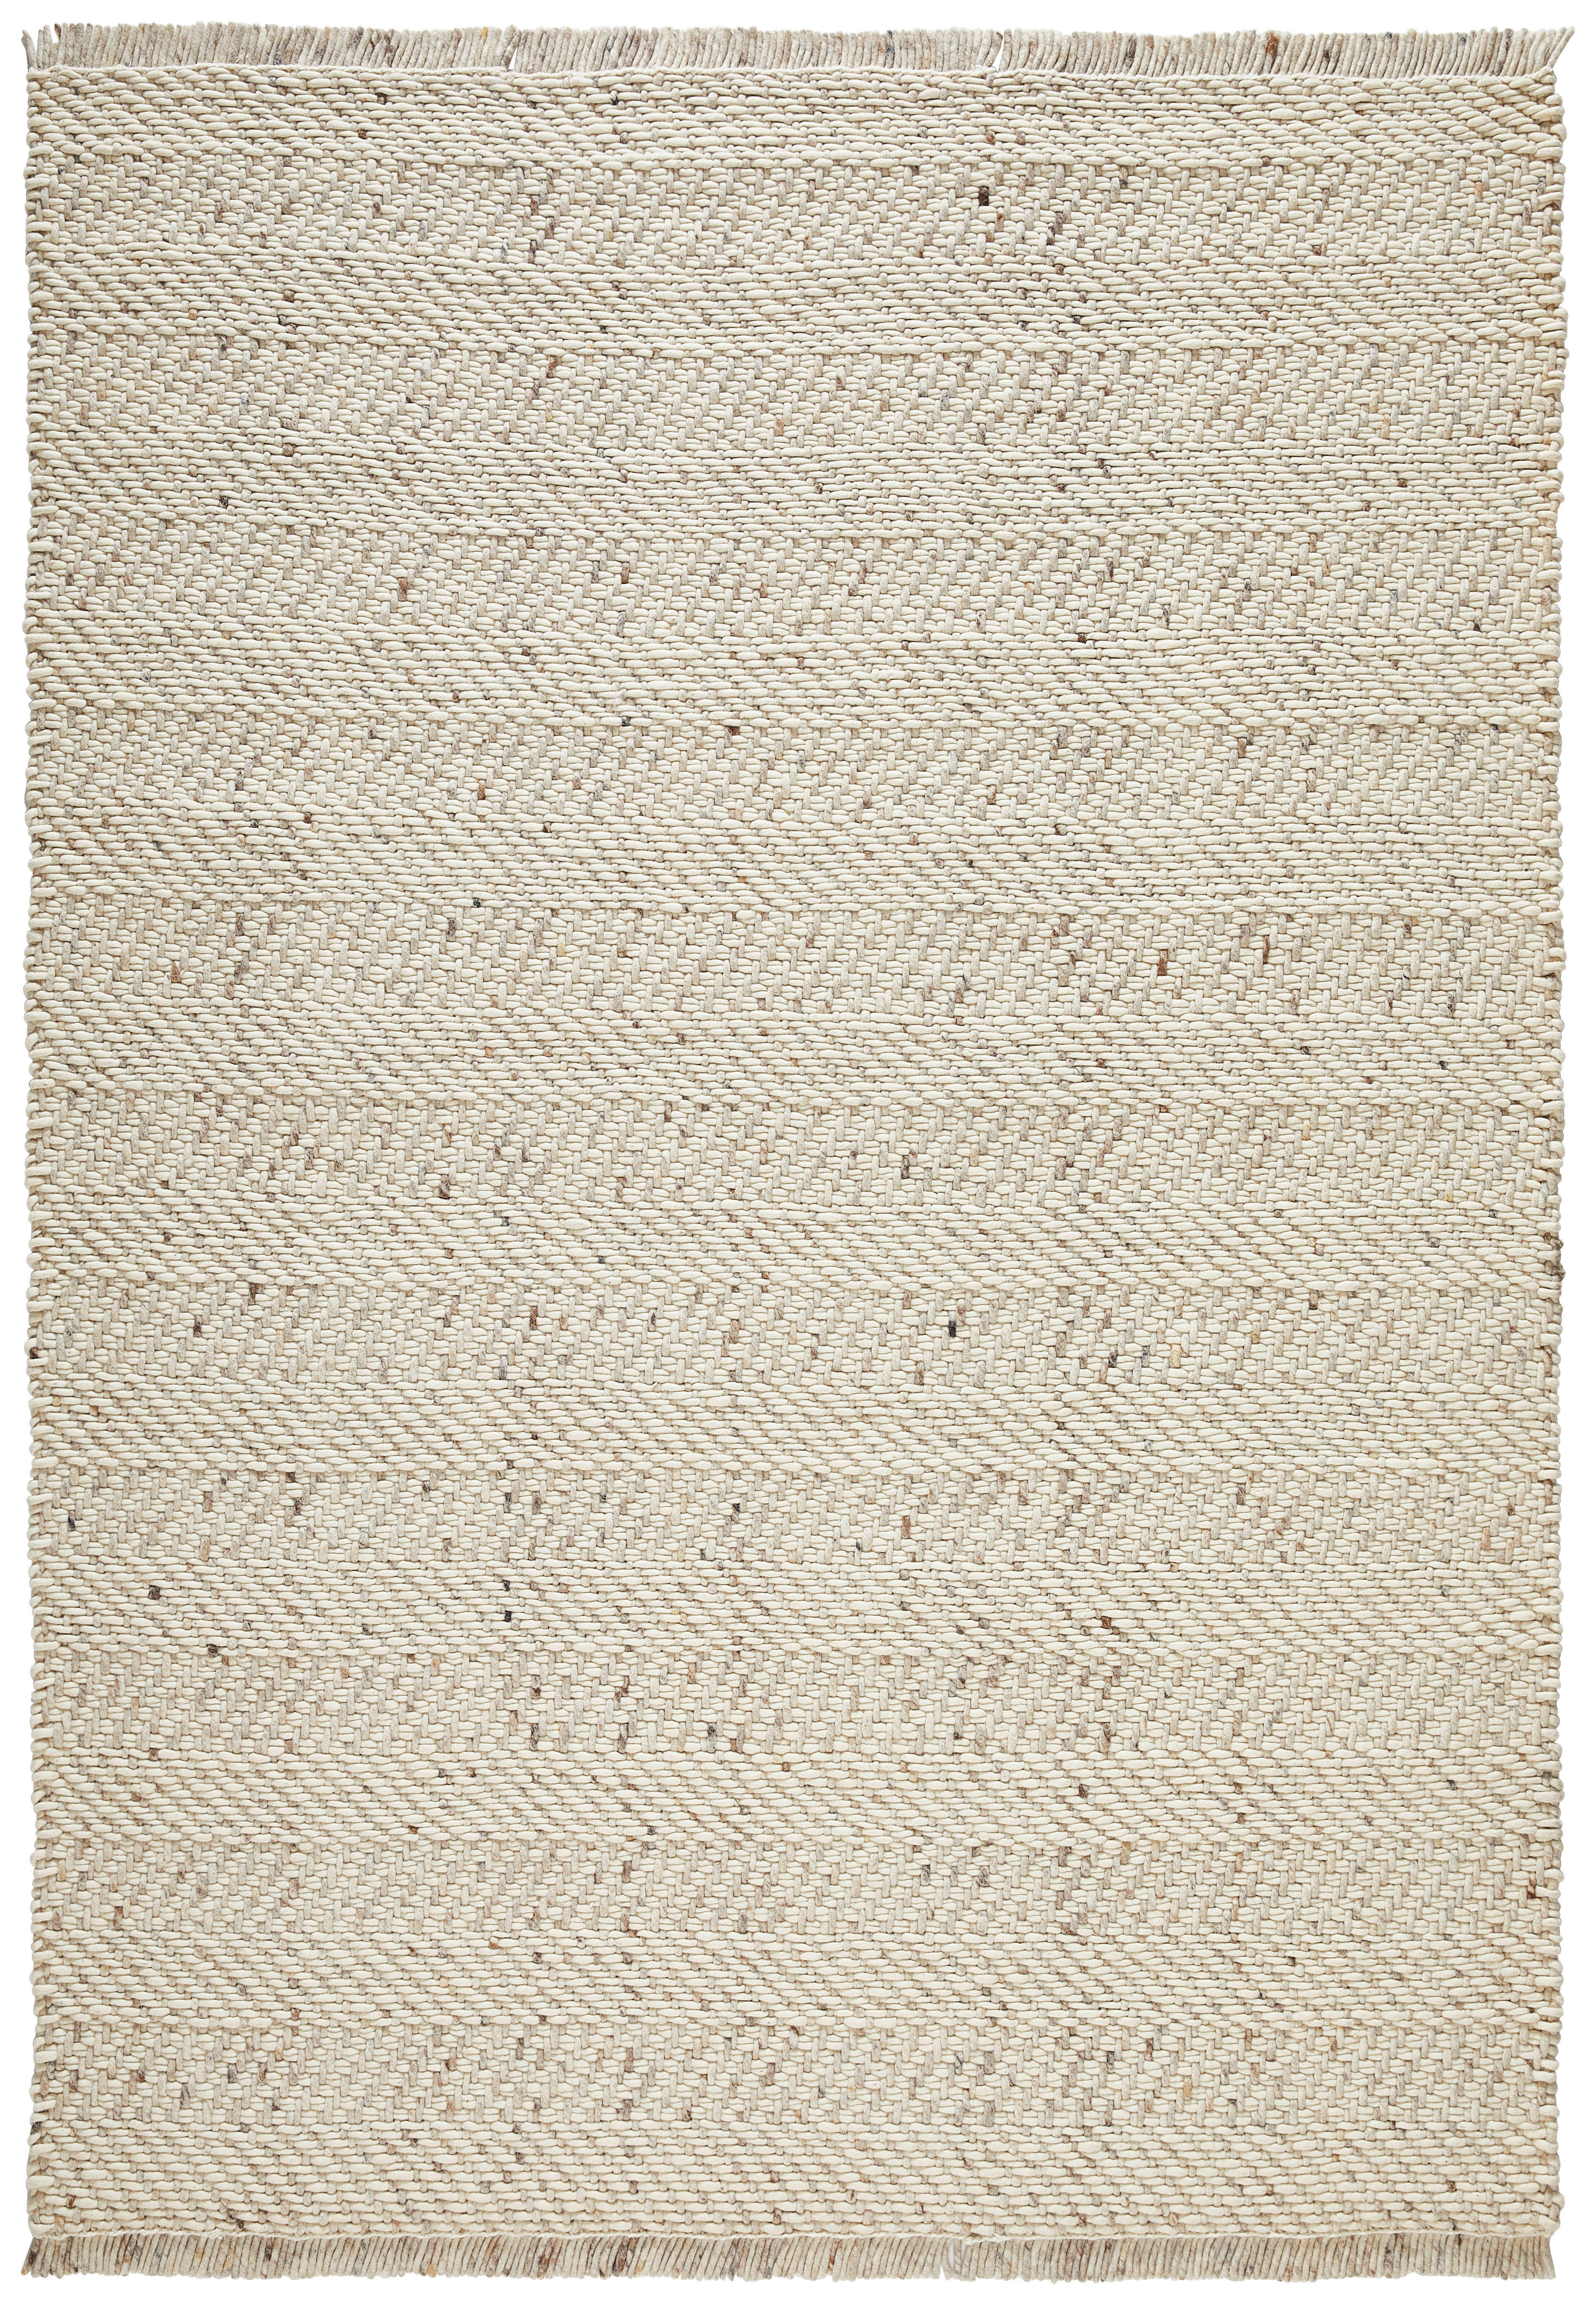 HANDWEBTEPPICH 130/190 cm  - Beige/Weiß, Basics, Textil (130/190cm) - Linea Natura